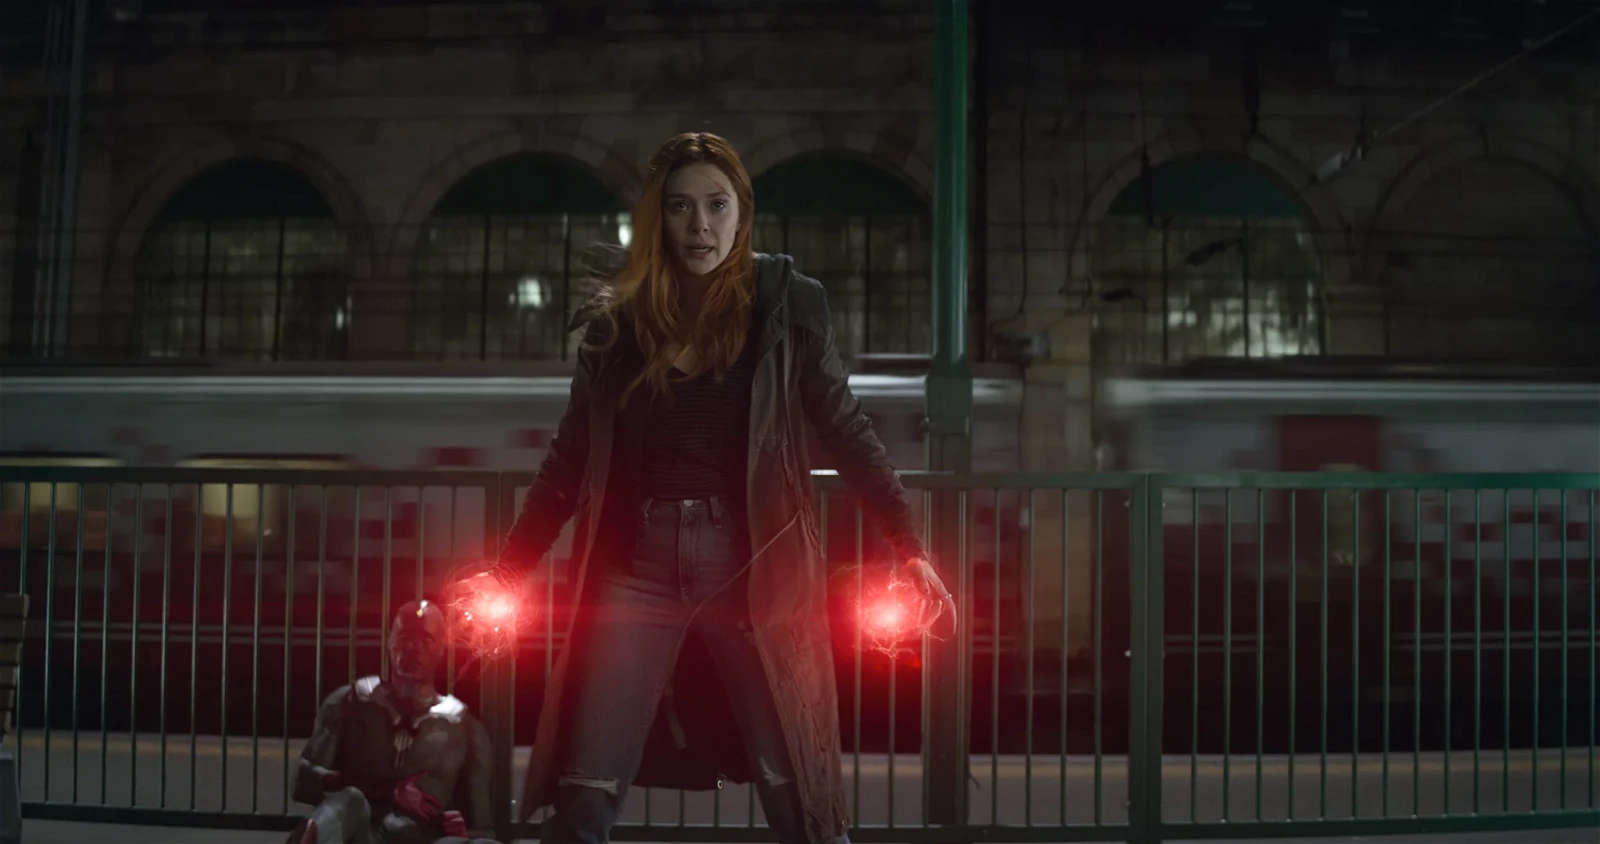 Elizabeth Olsen as Scarlet Witch in the showdown against the Black Oder in Avengers: Infinity War